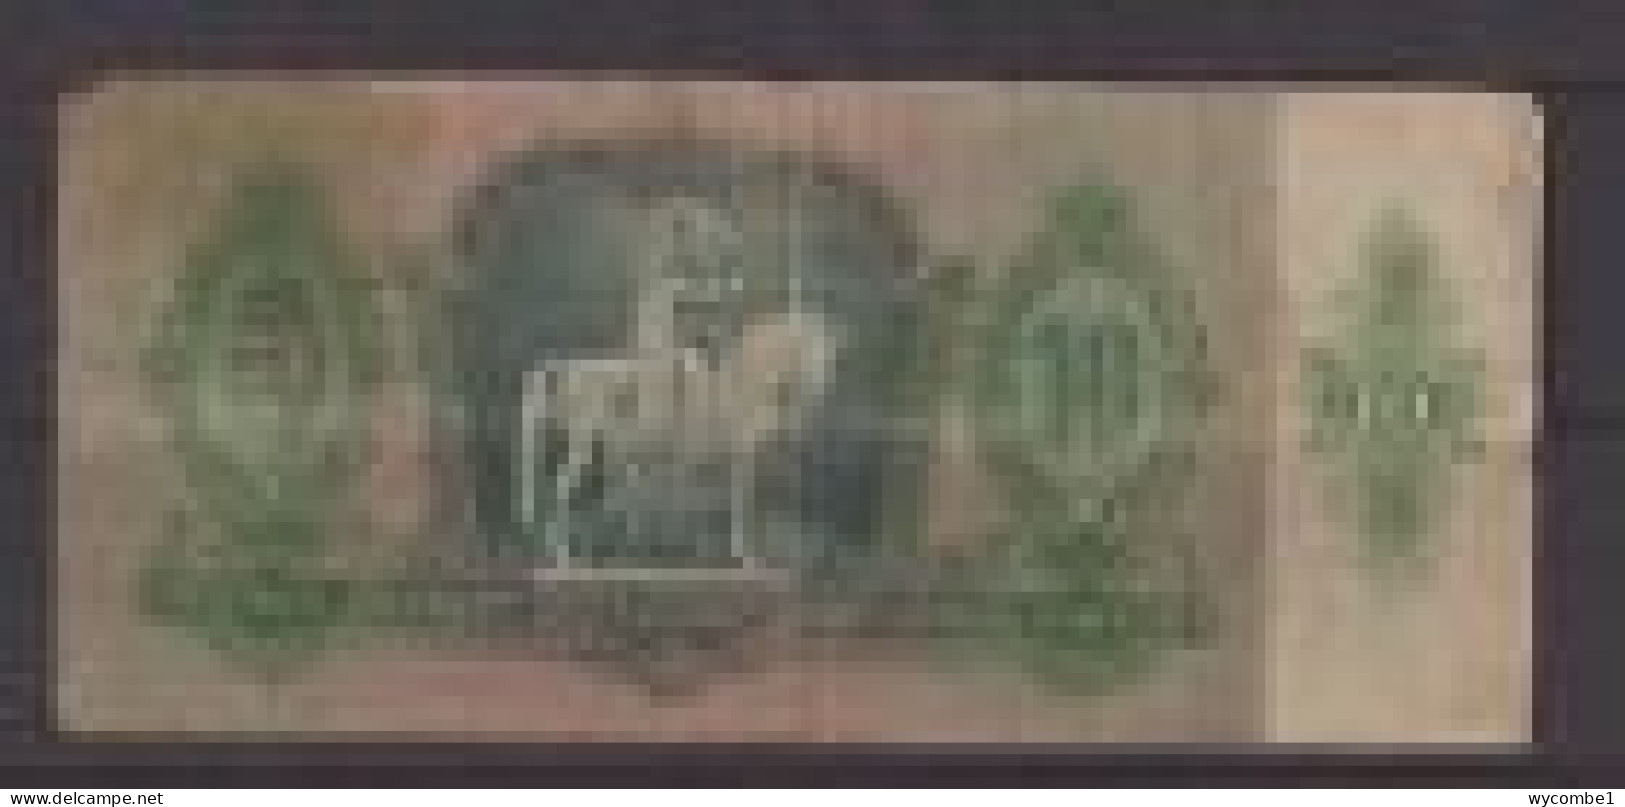 HUNGARY - 1936 10 Pengo Circulated Banknote - Ungheria